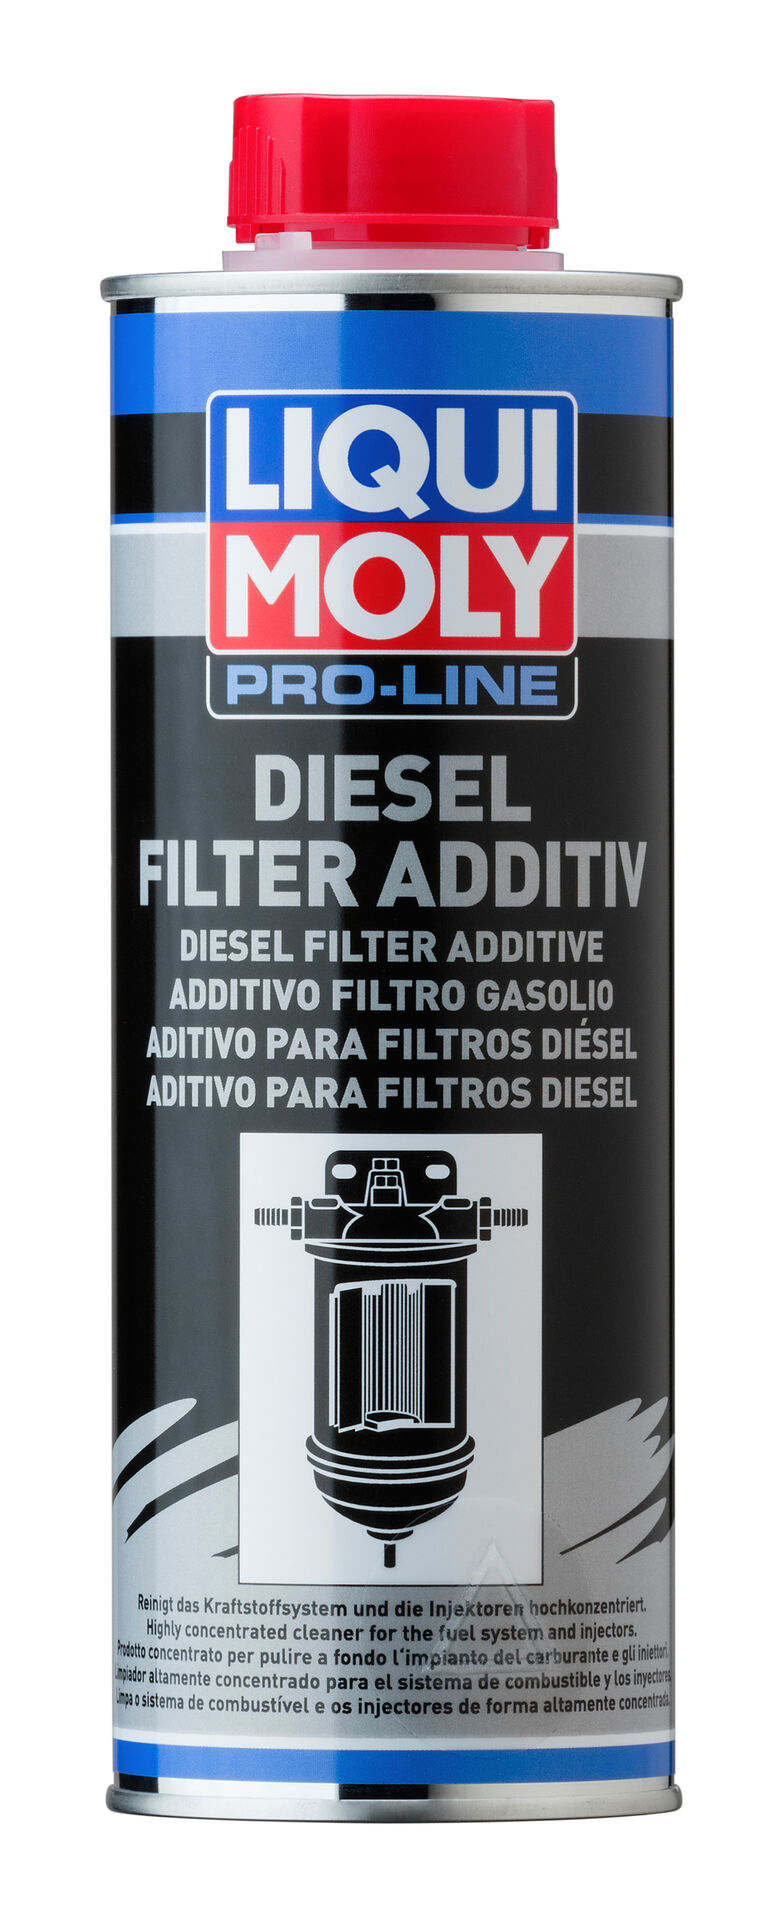 Liqui Moly Pro-Line Diesel Filter Additiv